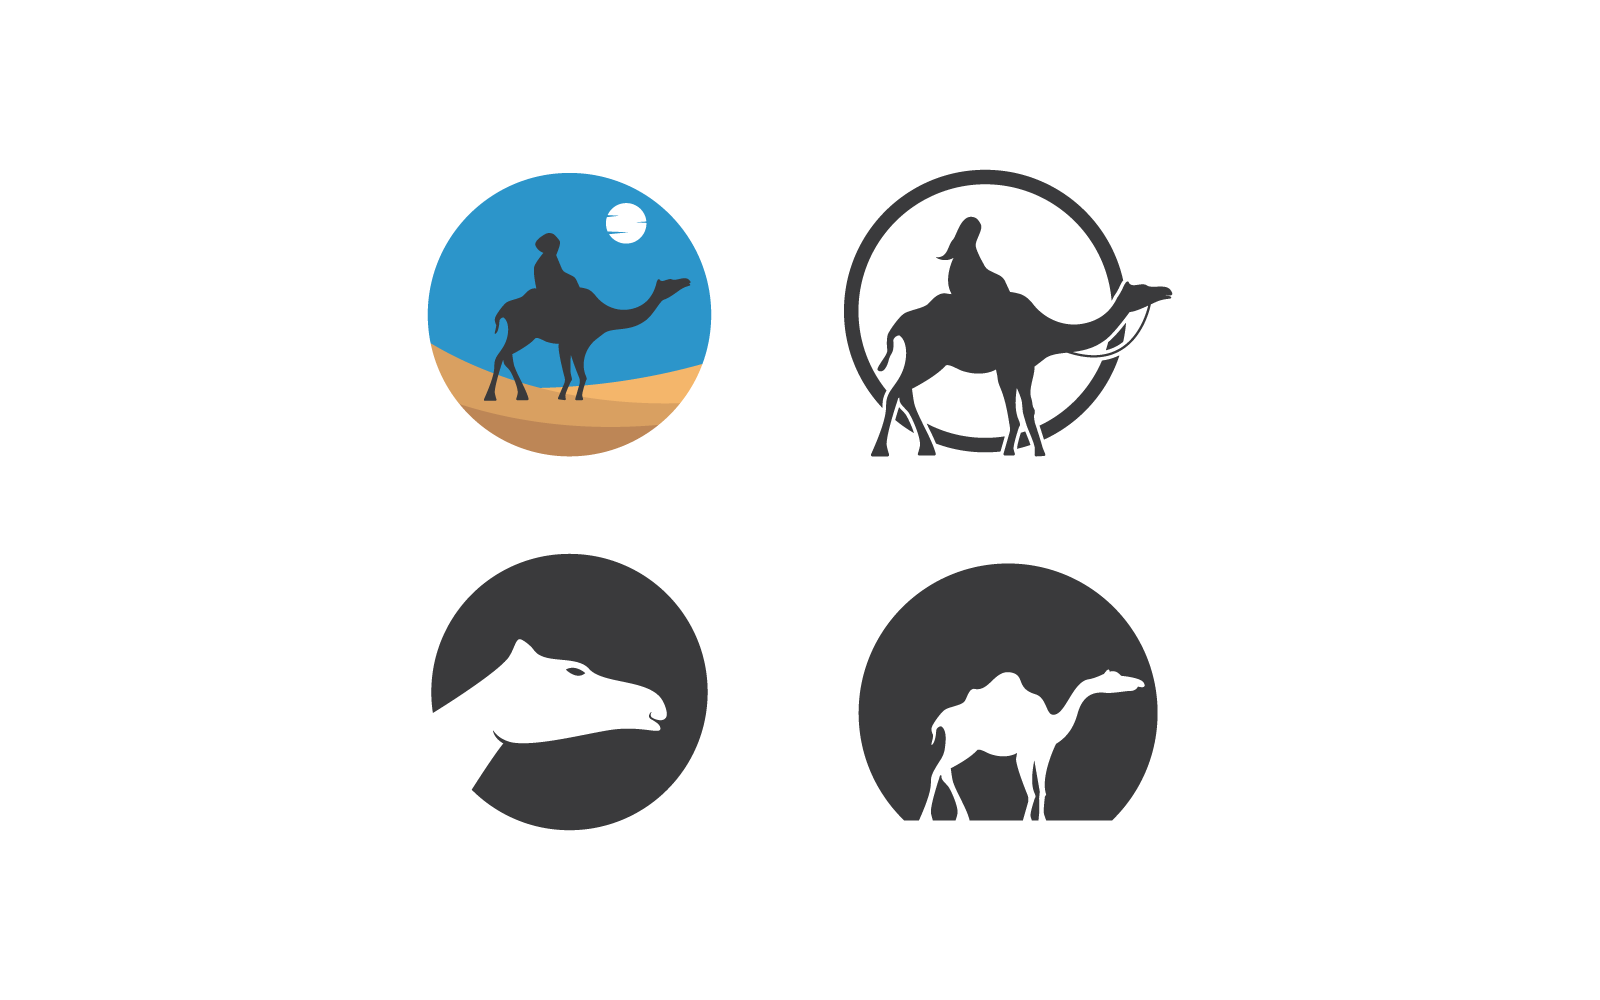 Camel design logo illustration vector